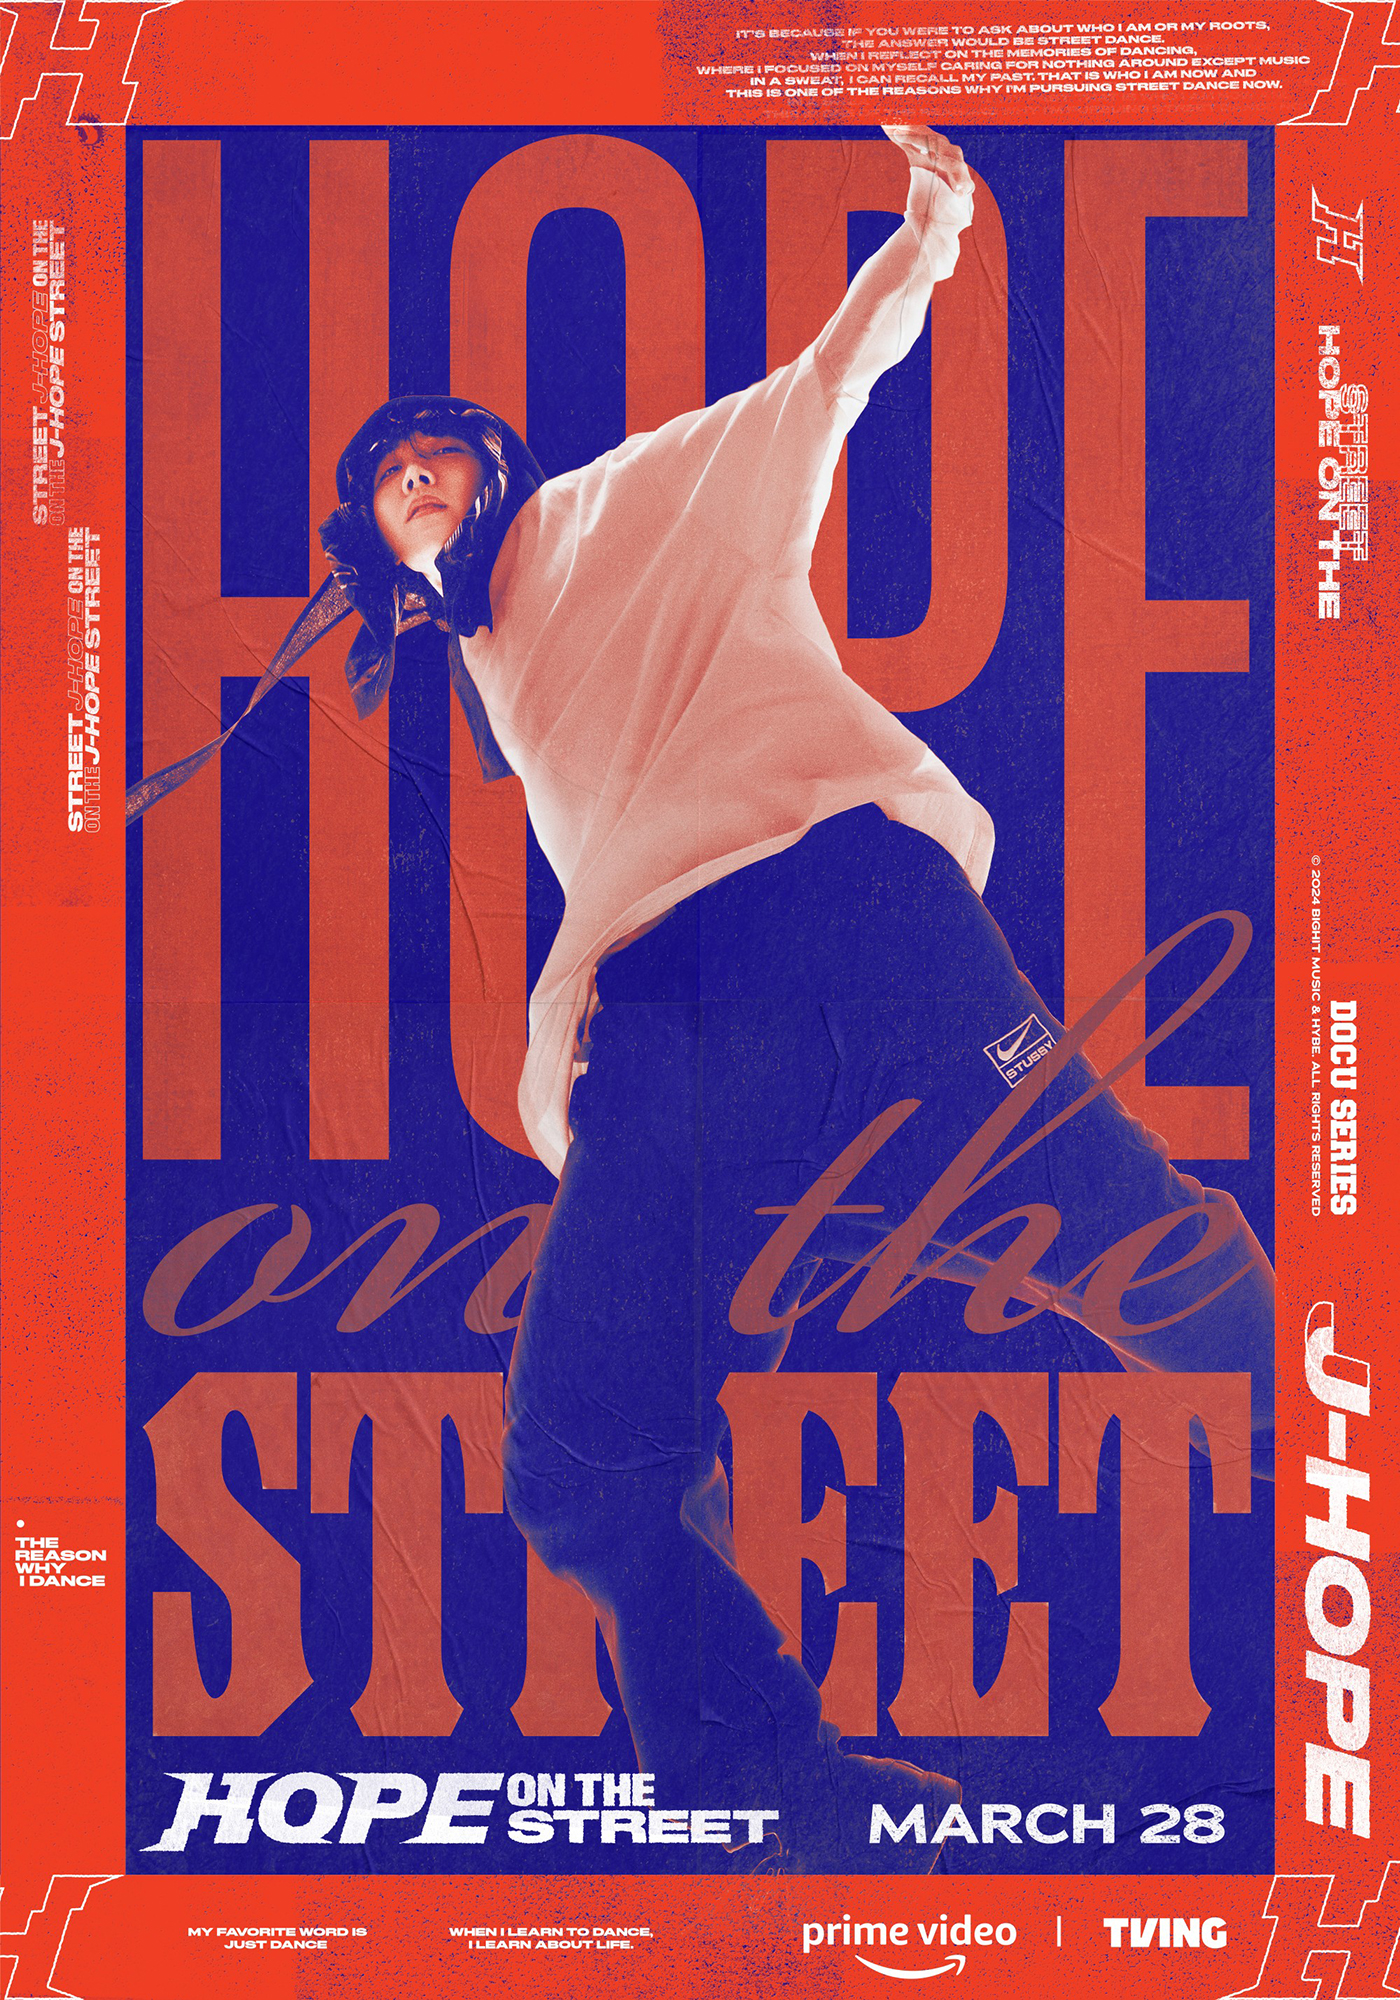 BTS J-HOPEドキュメンタリーシリーズ『HOPE ON THE STREET』のメインポスター公開 - 画像一覧（1/1）